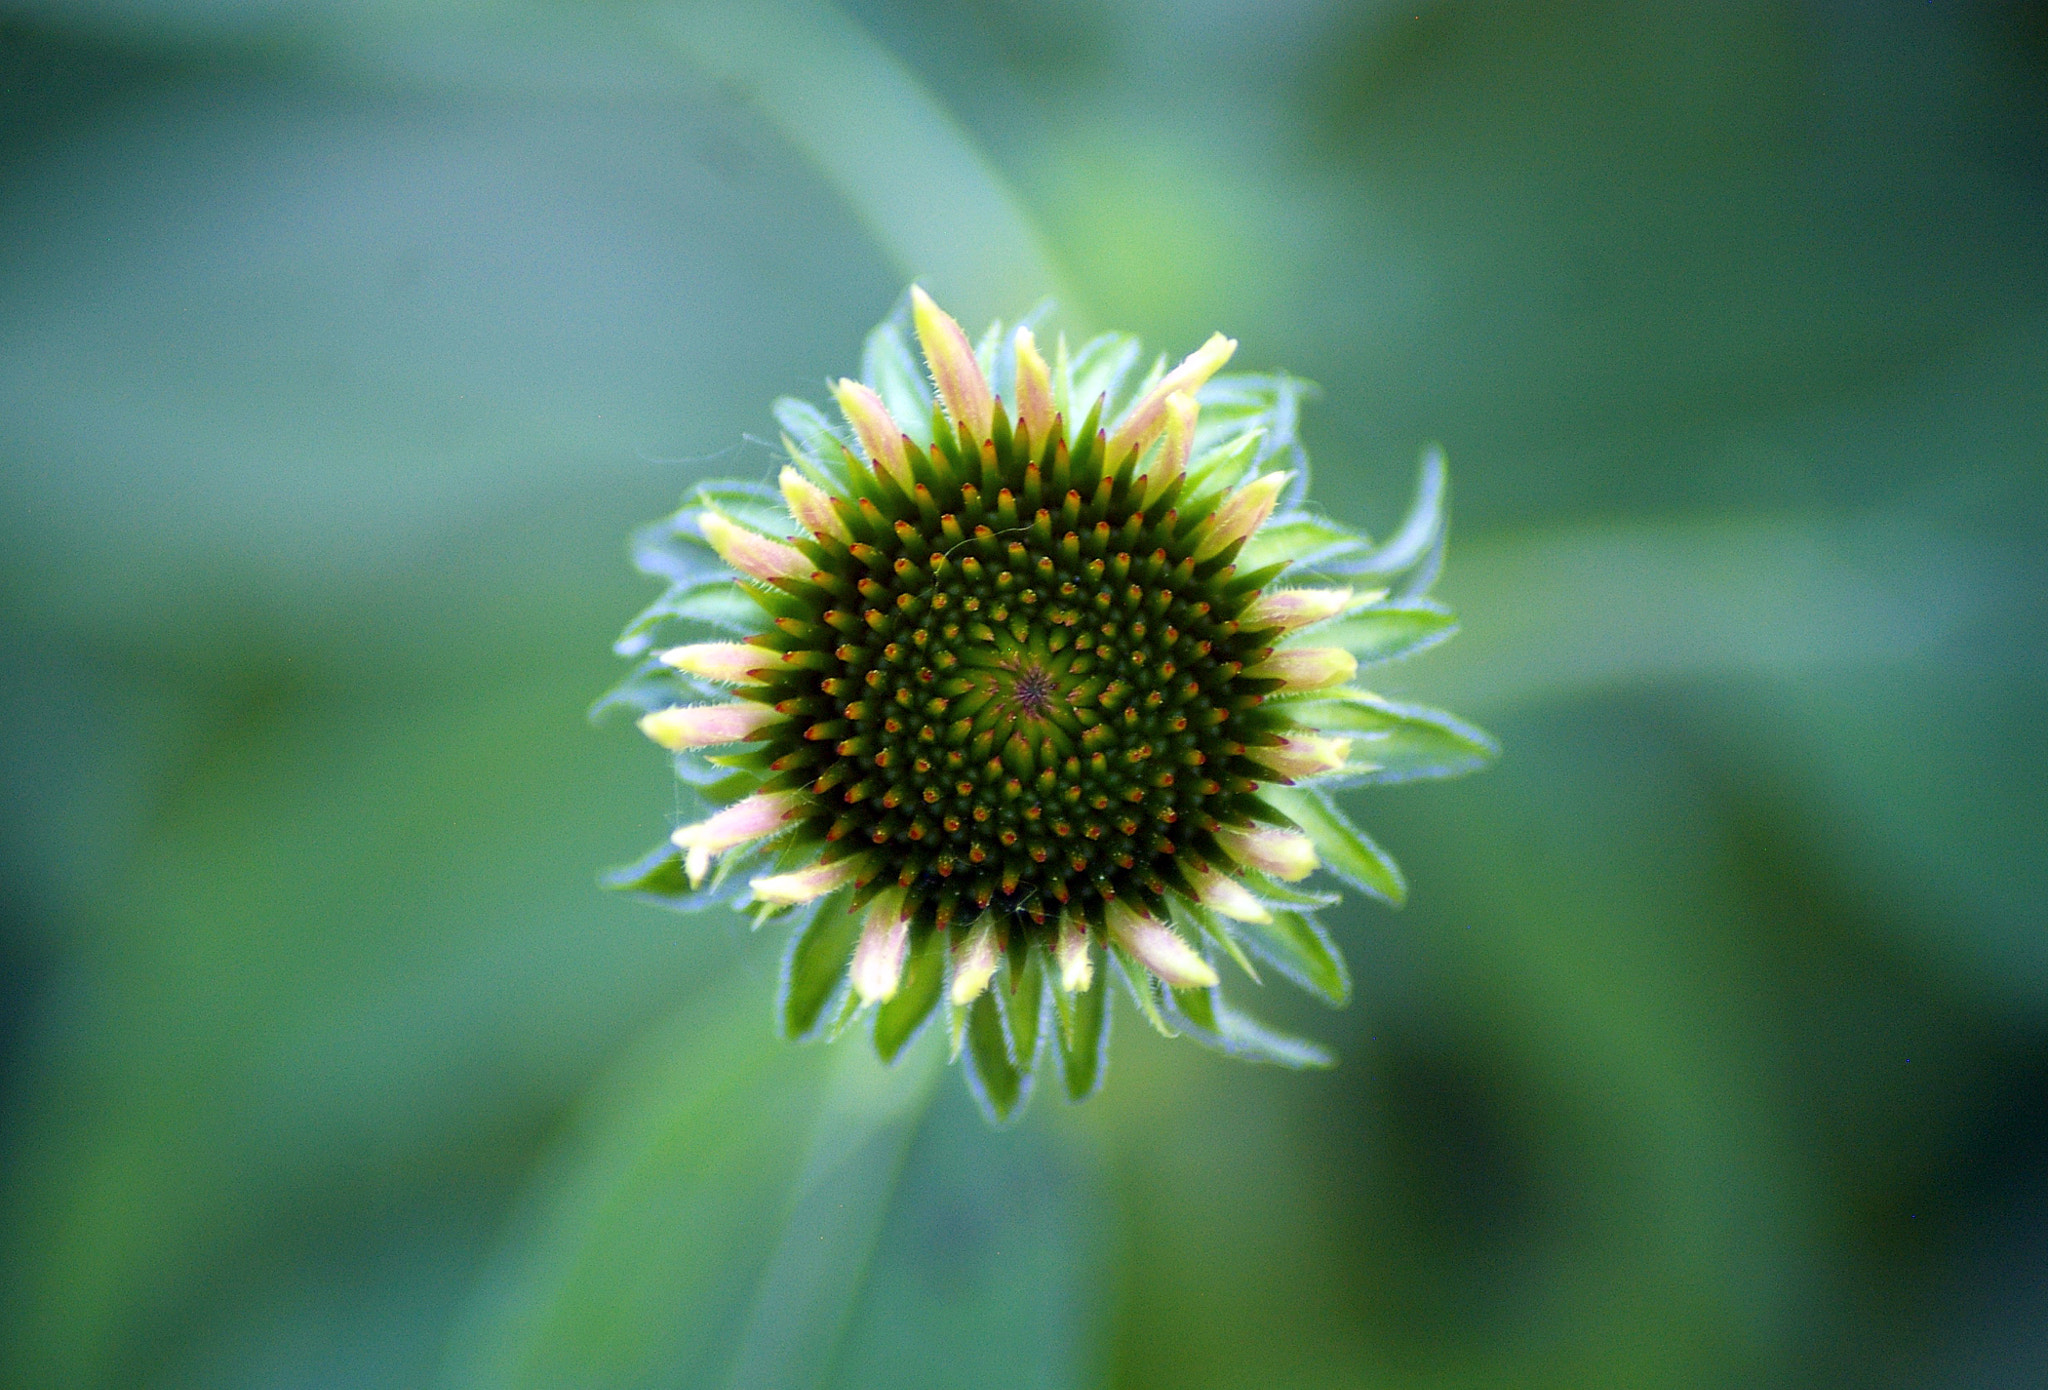 Pentax *ist DL + Tamron AF 70-300mm F4-5.6 Di LD Macro sample photo. Fresh sunflower photography